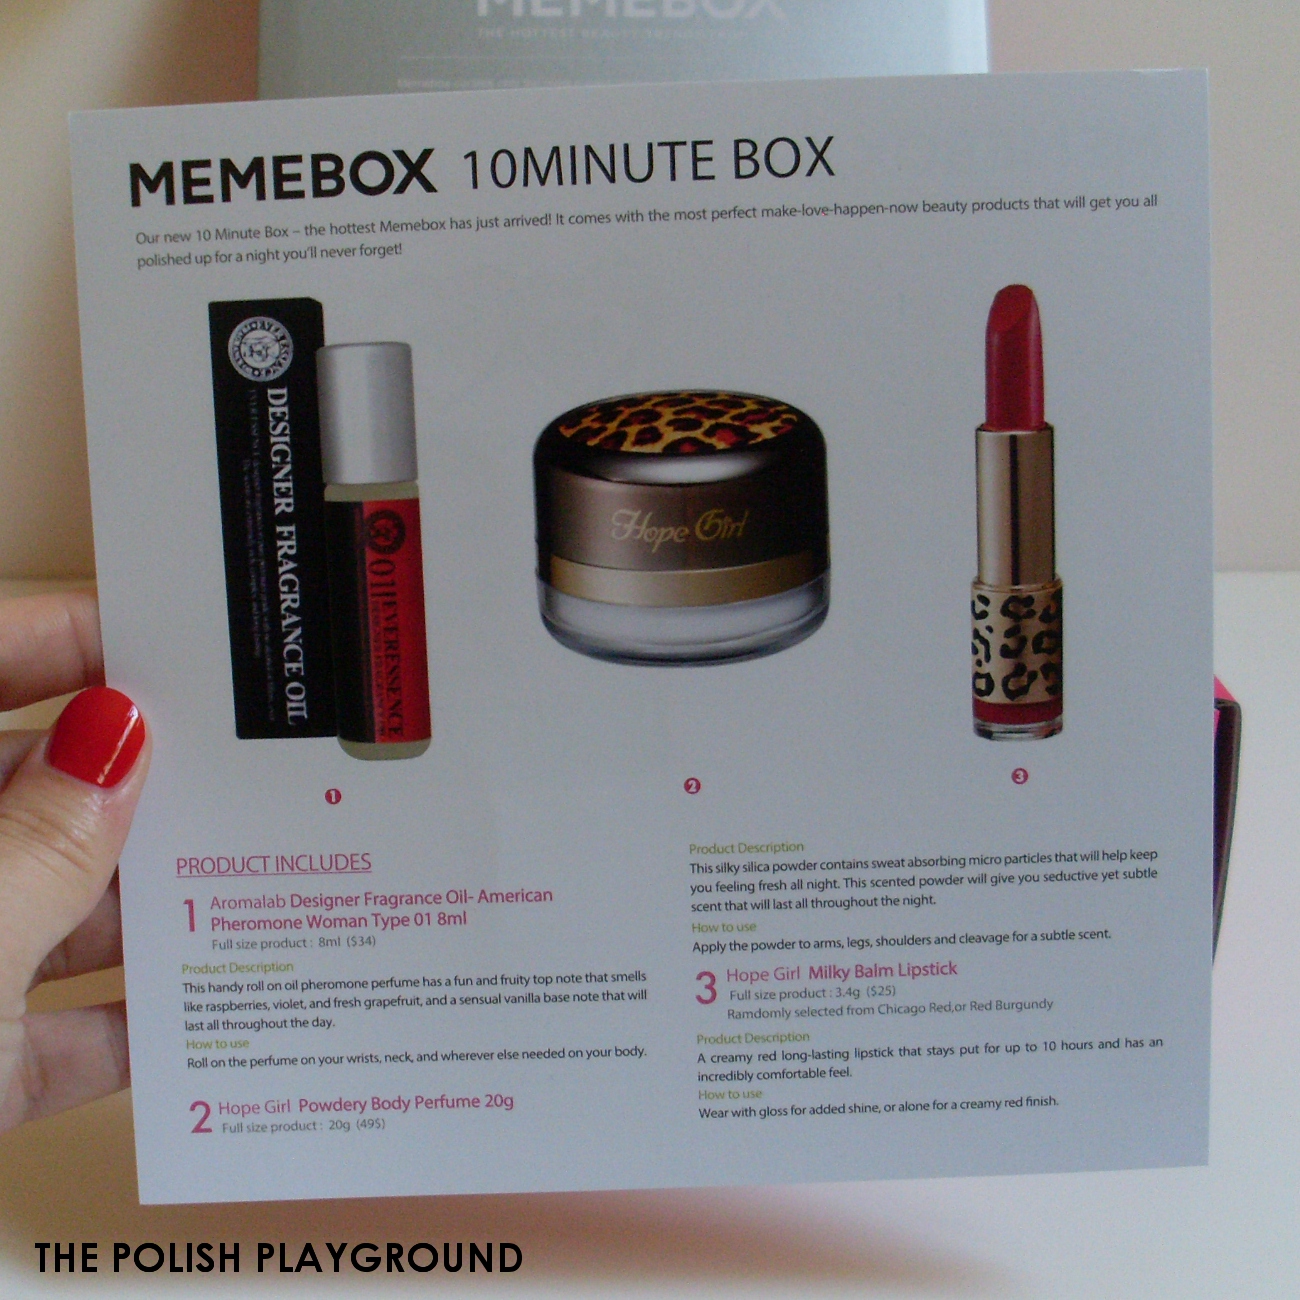 Memebox 10 Miniute Box Unboxing